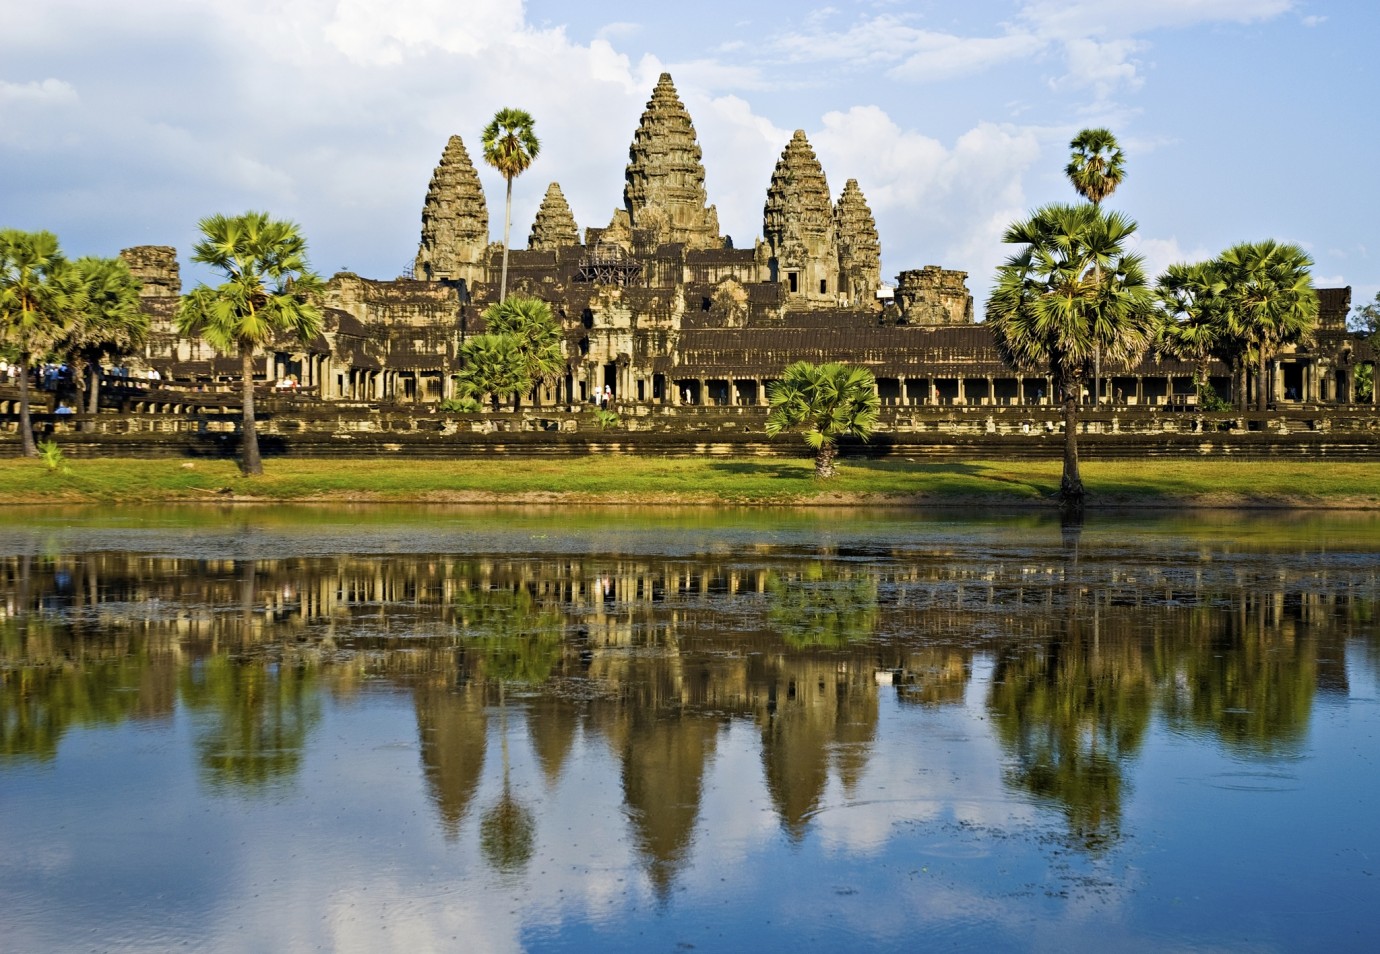 1451480566-1451480511-1451479234-1437491814-1437491805-1437491800-cambodia-temples-and-jungles-of-cambodia.jpg